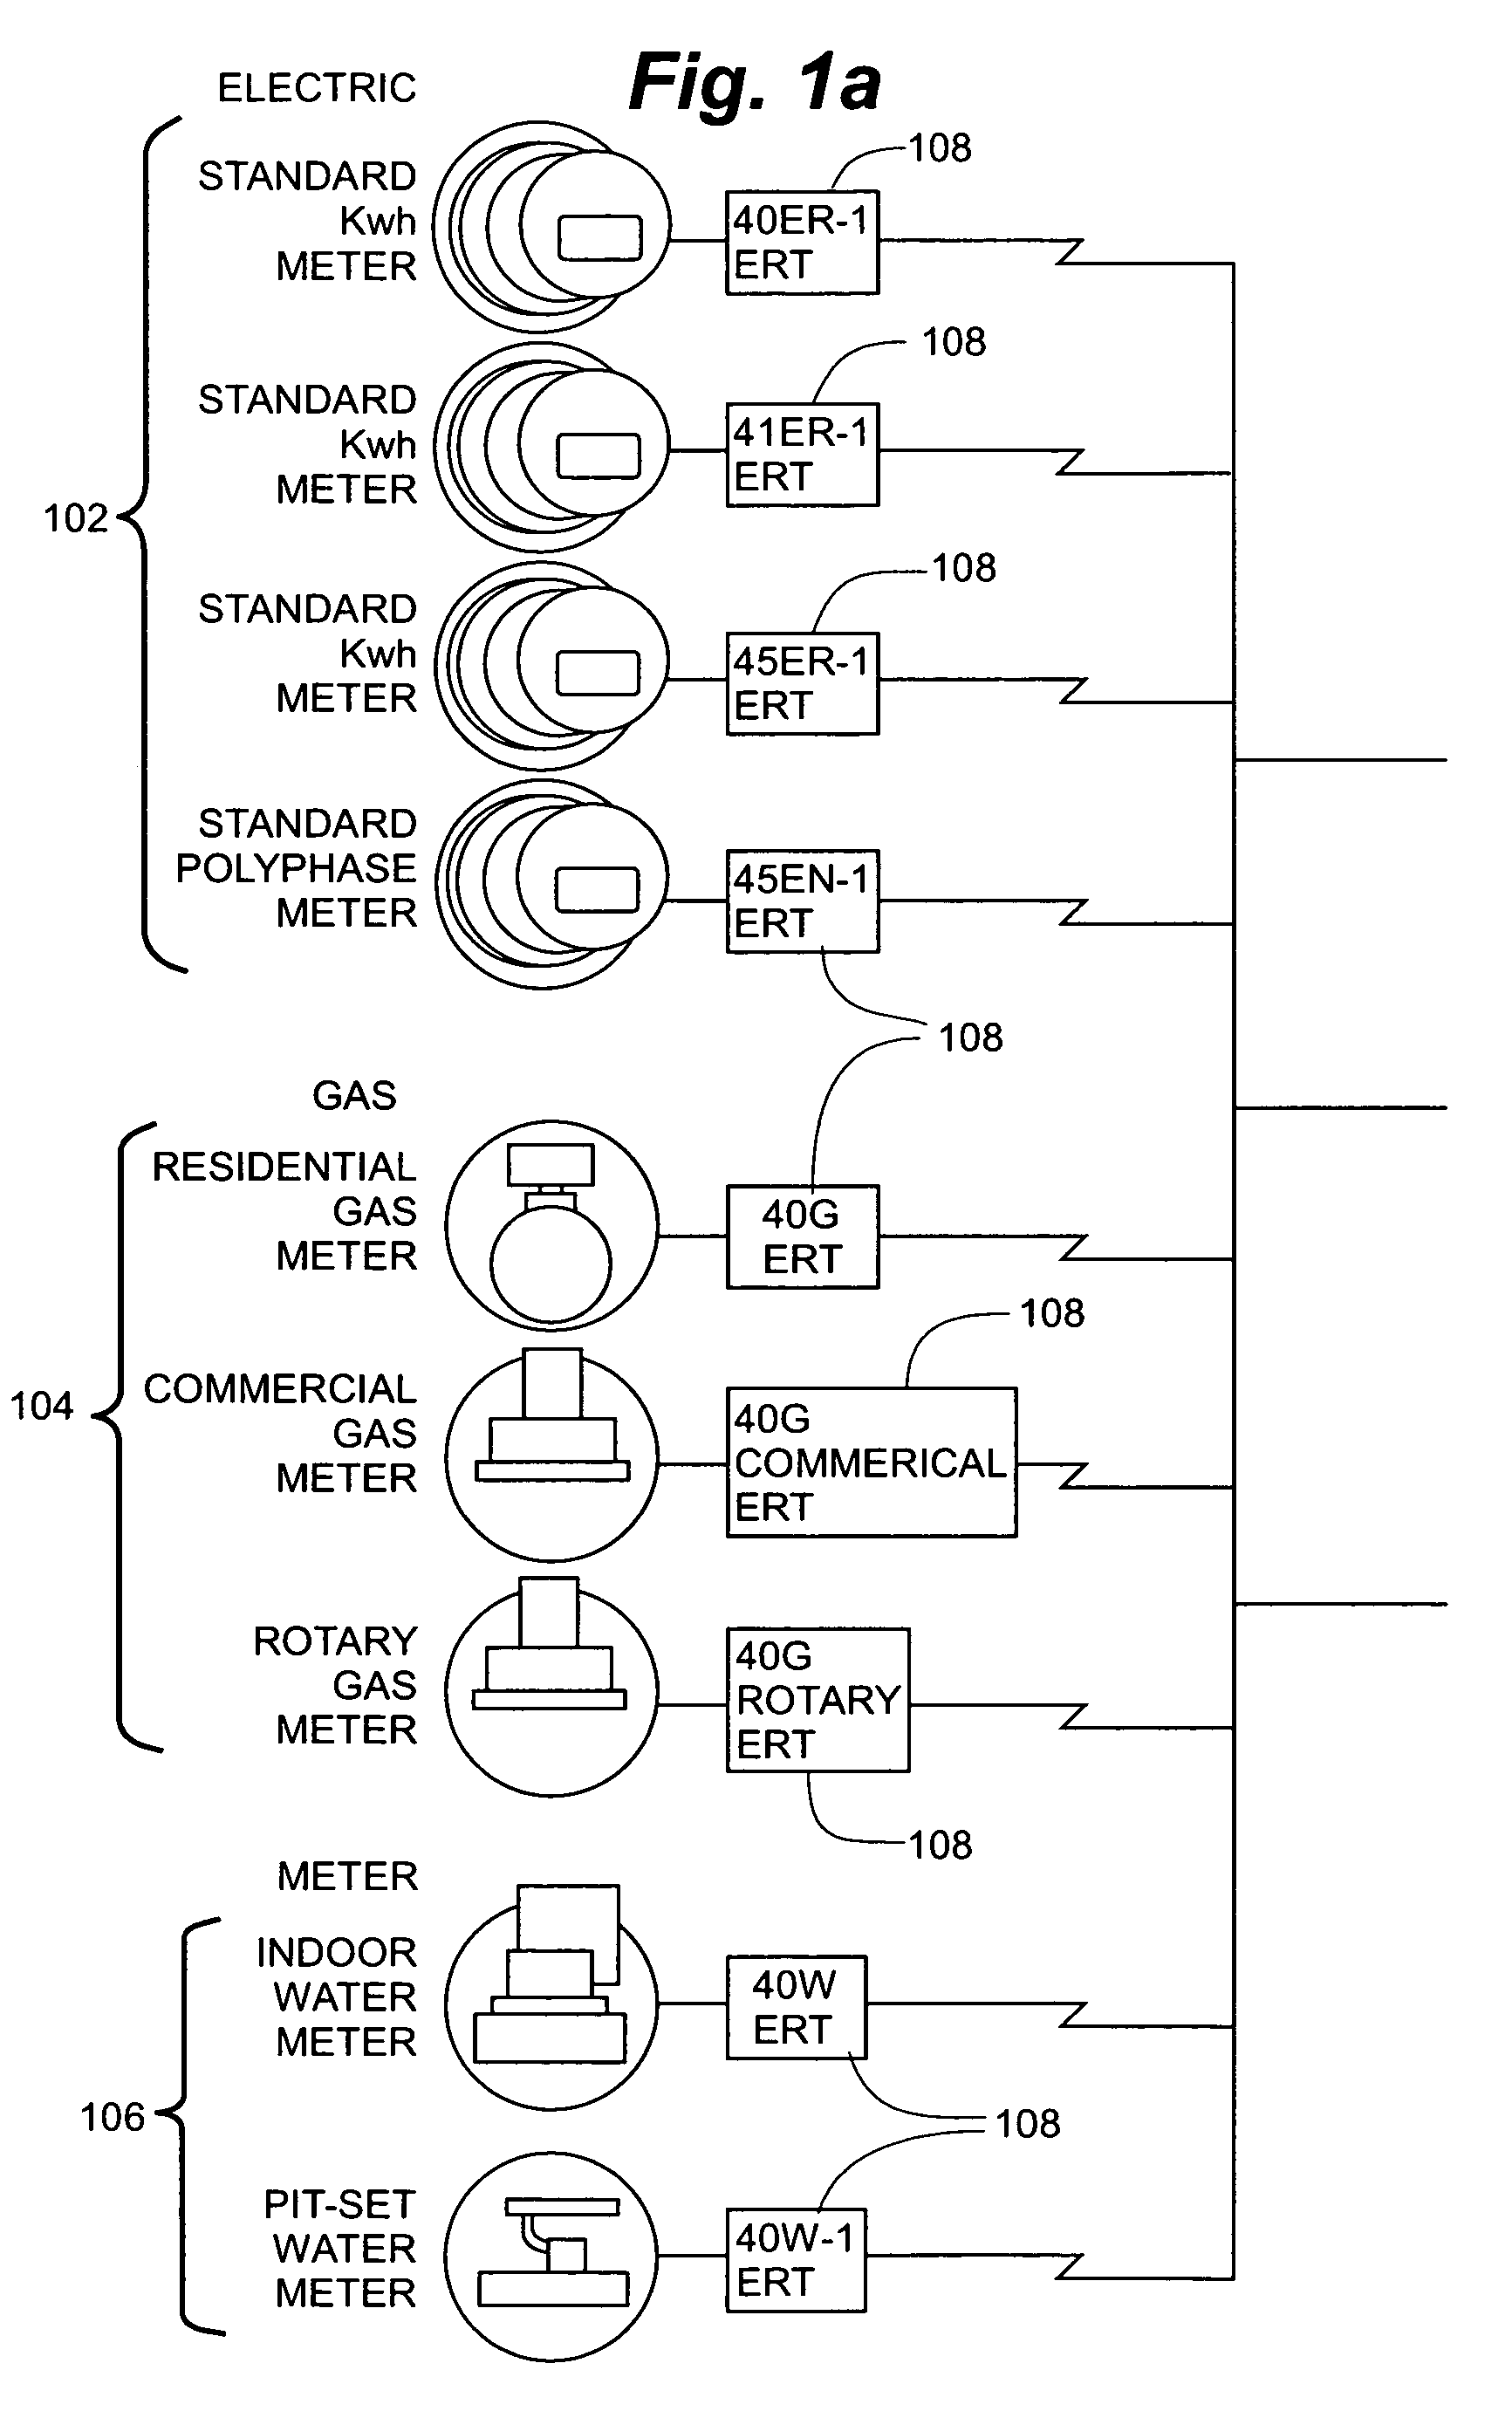 RF meter reading system